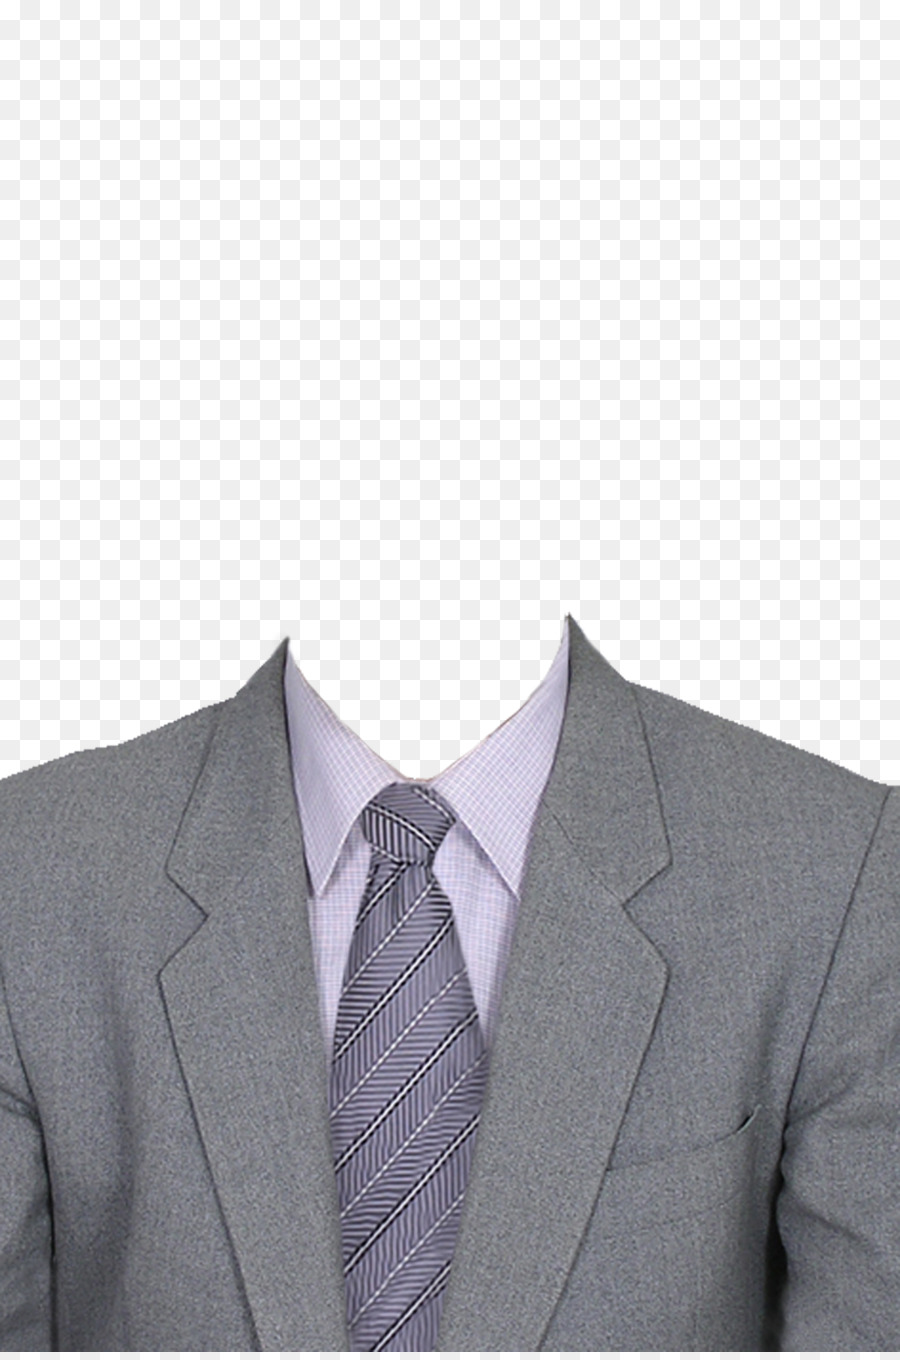 Suit Dress - Wise Man png download - 1200*1803 - Free Transparent Suit png Download.